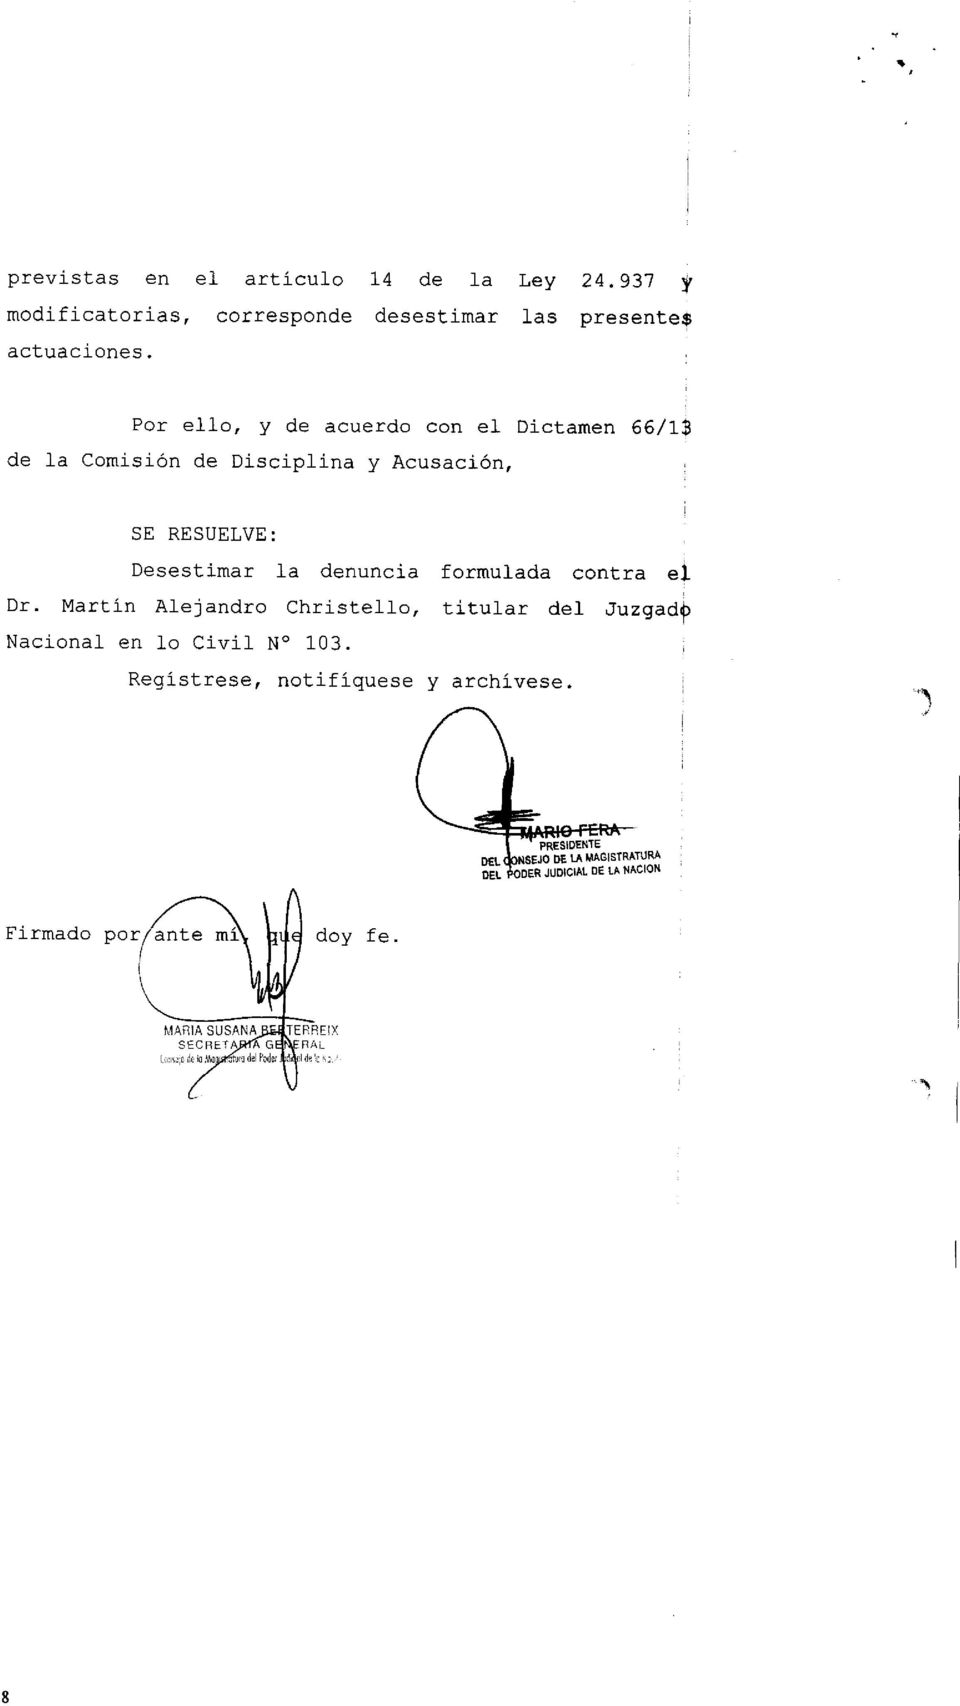 formulada contra el Dr. Martín Alejandro Christello, titular del Juzgadl) Nacional en lo Civil N 103.